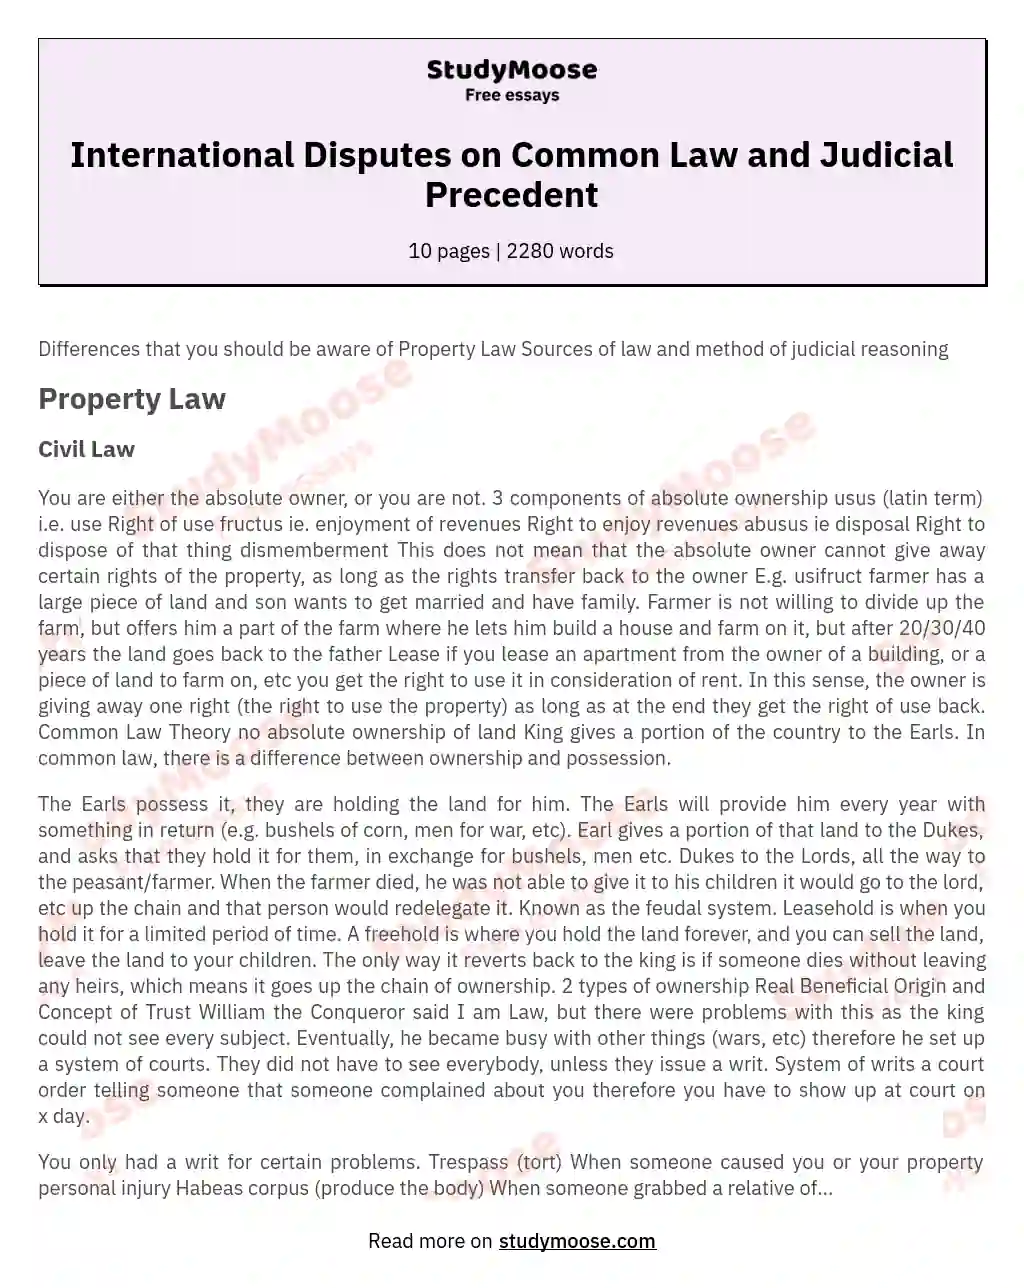 International Disputes on Common Law and Judicial Precedent essay